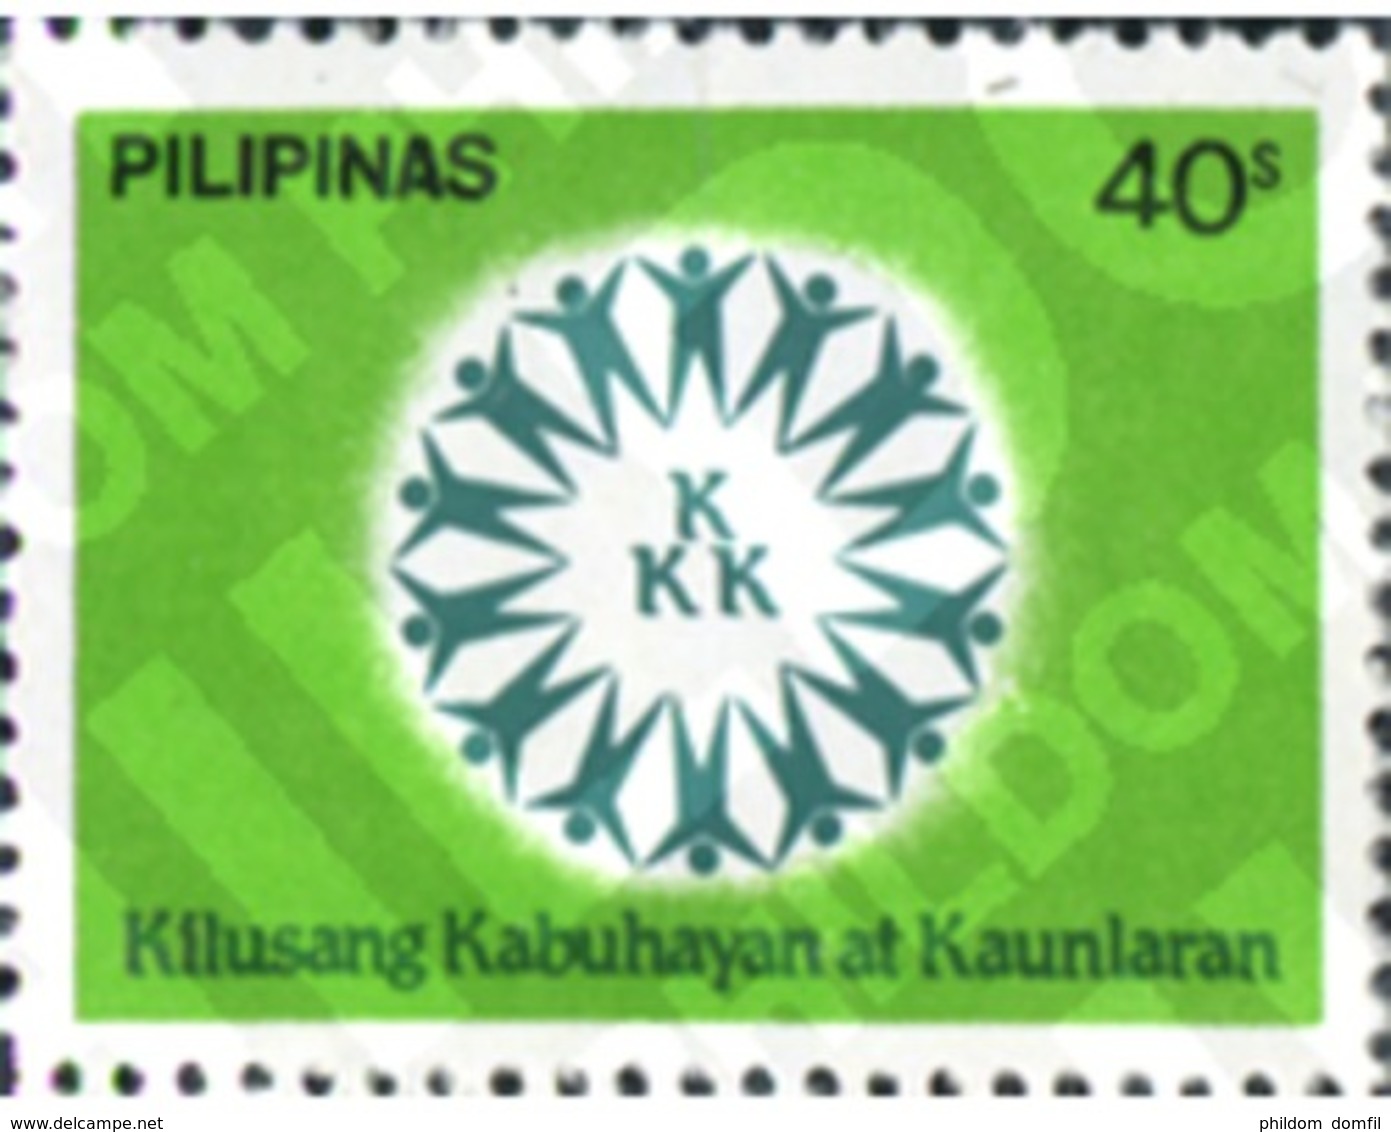 Ref. 313294 * MNH * - PHILIPPINES. 1982. CONFERENCIA KKK - Philippines